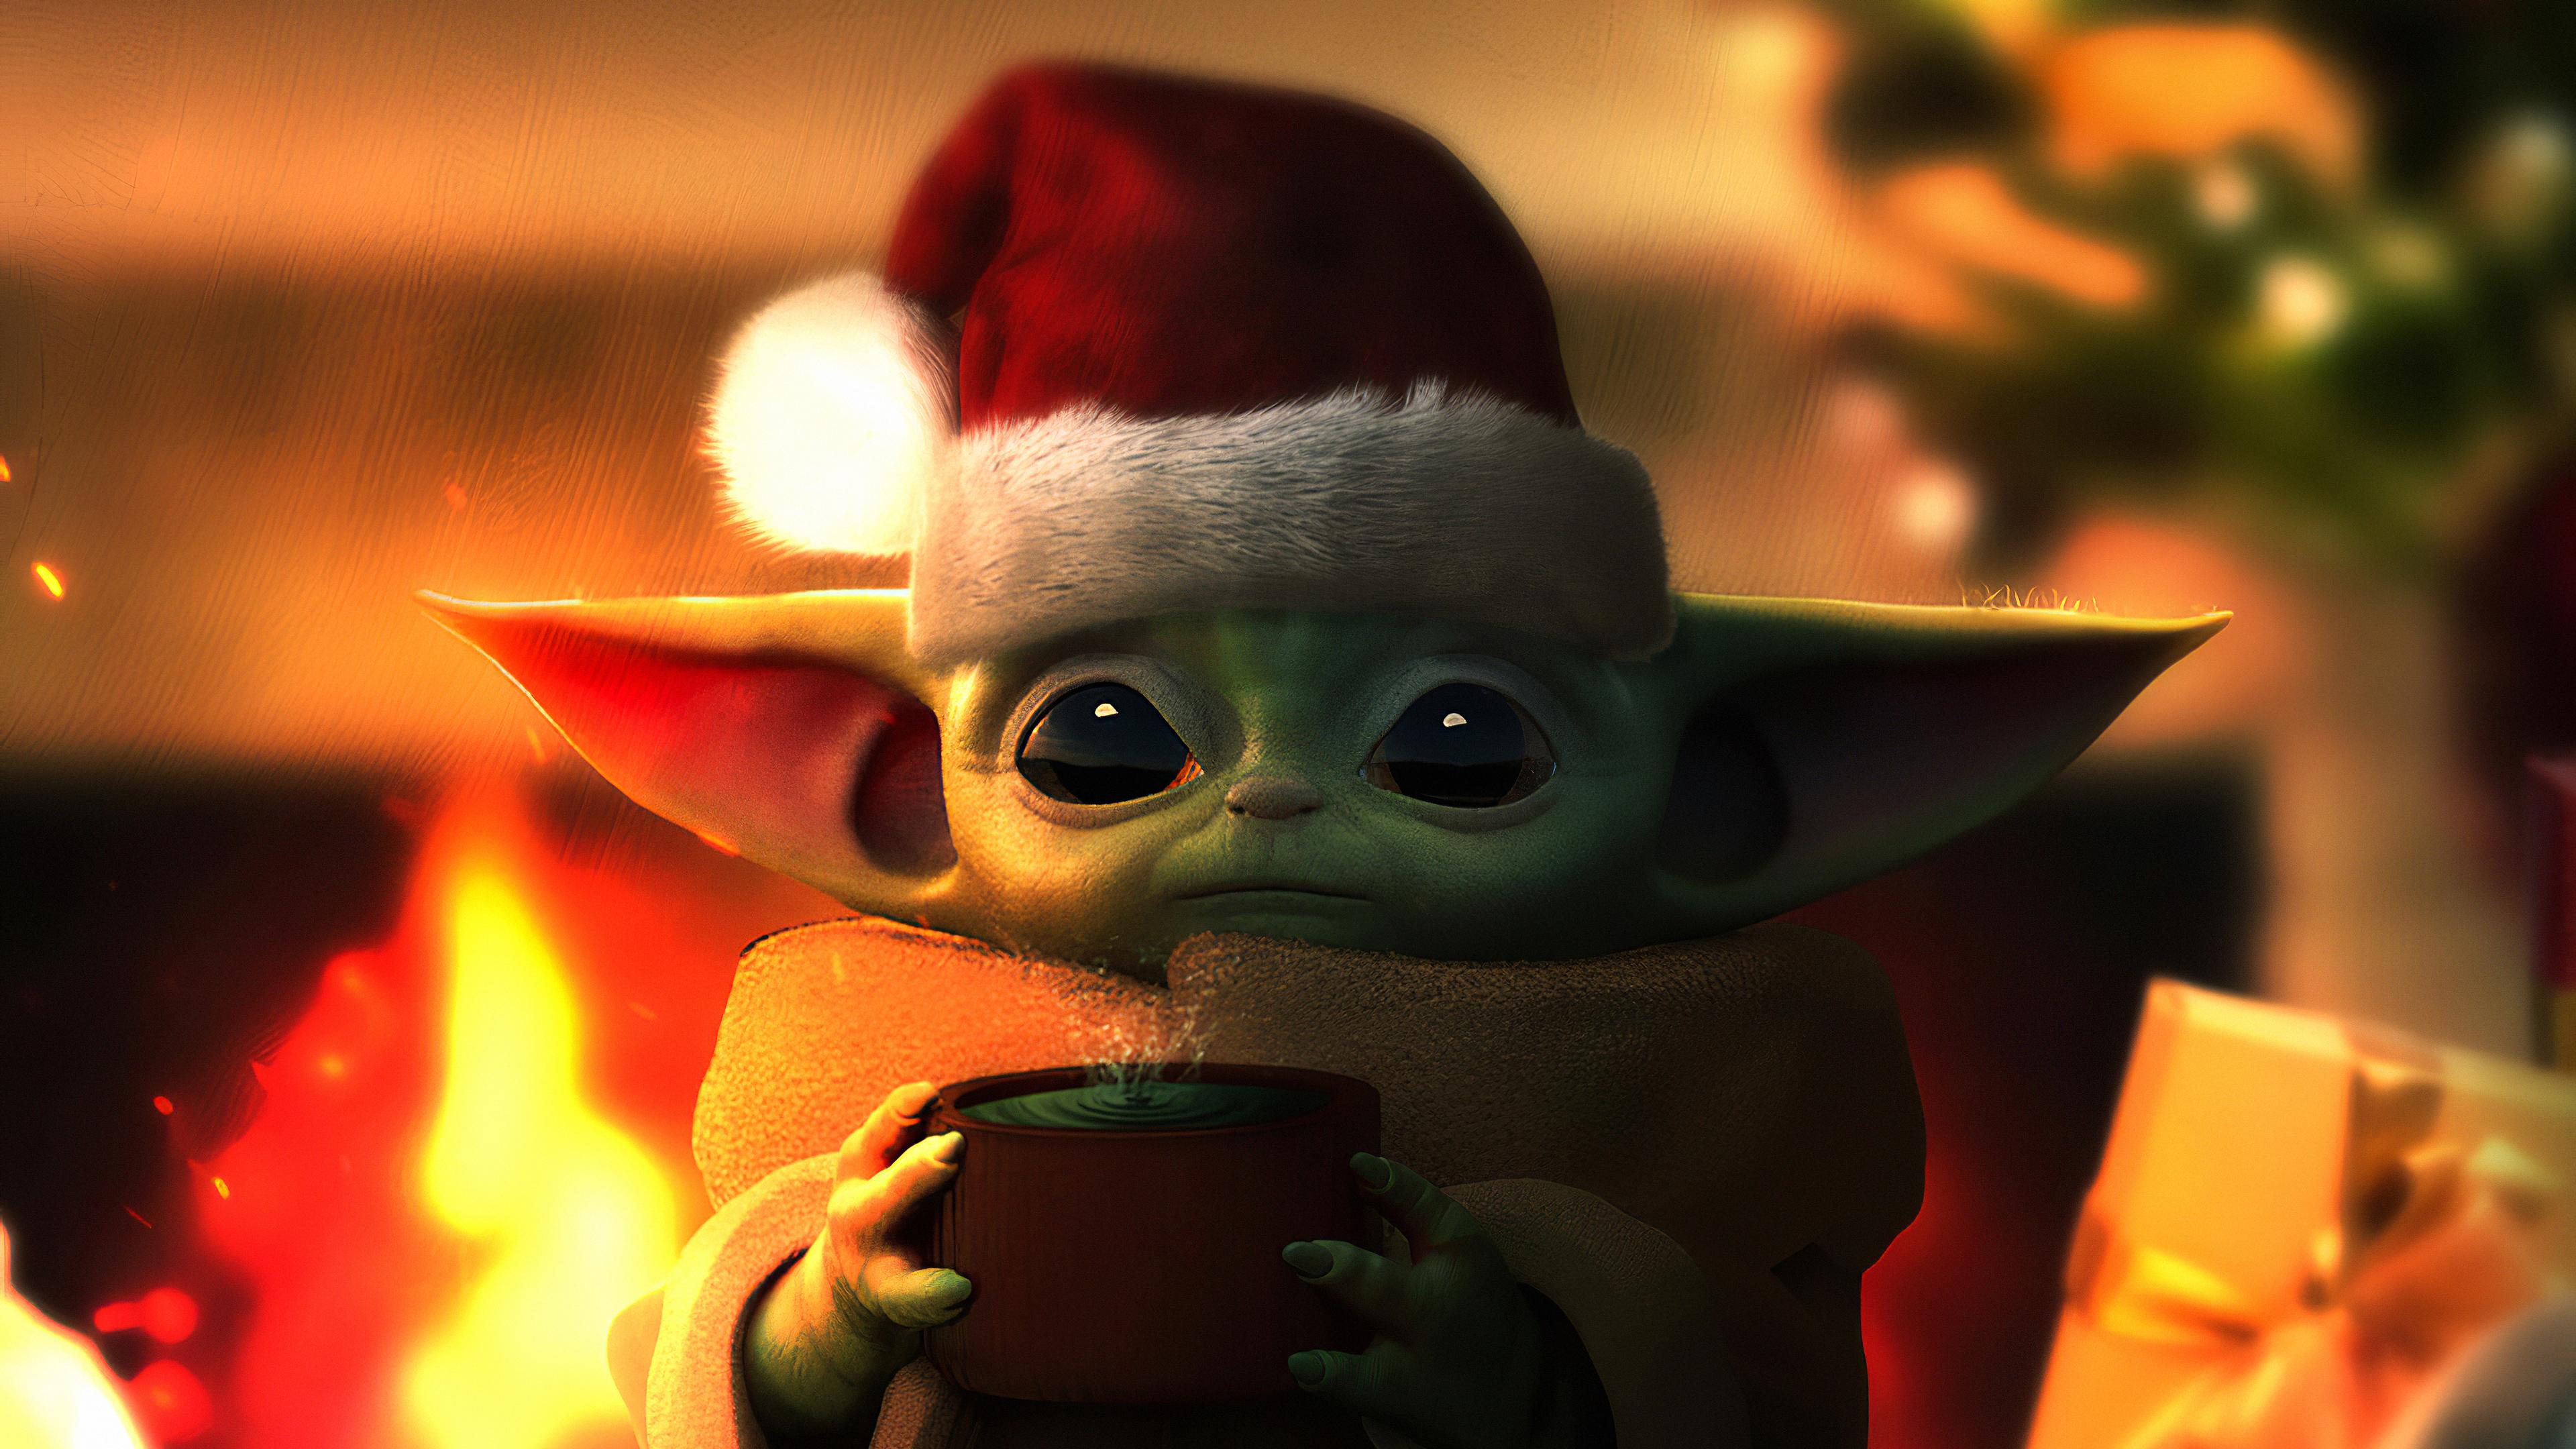 Baby Yoda wearing a santa hat 4k Ultra HD Wallpapers